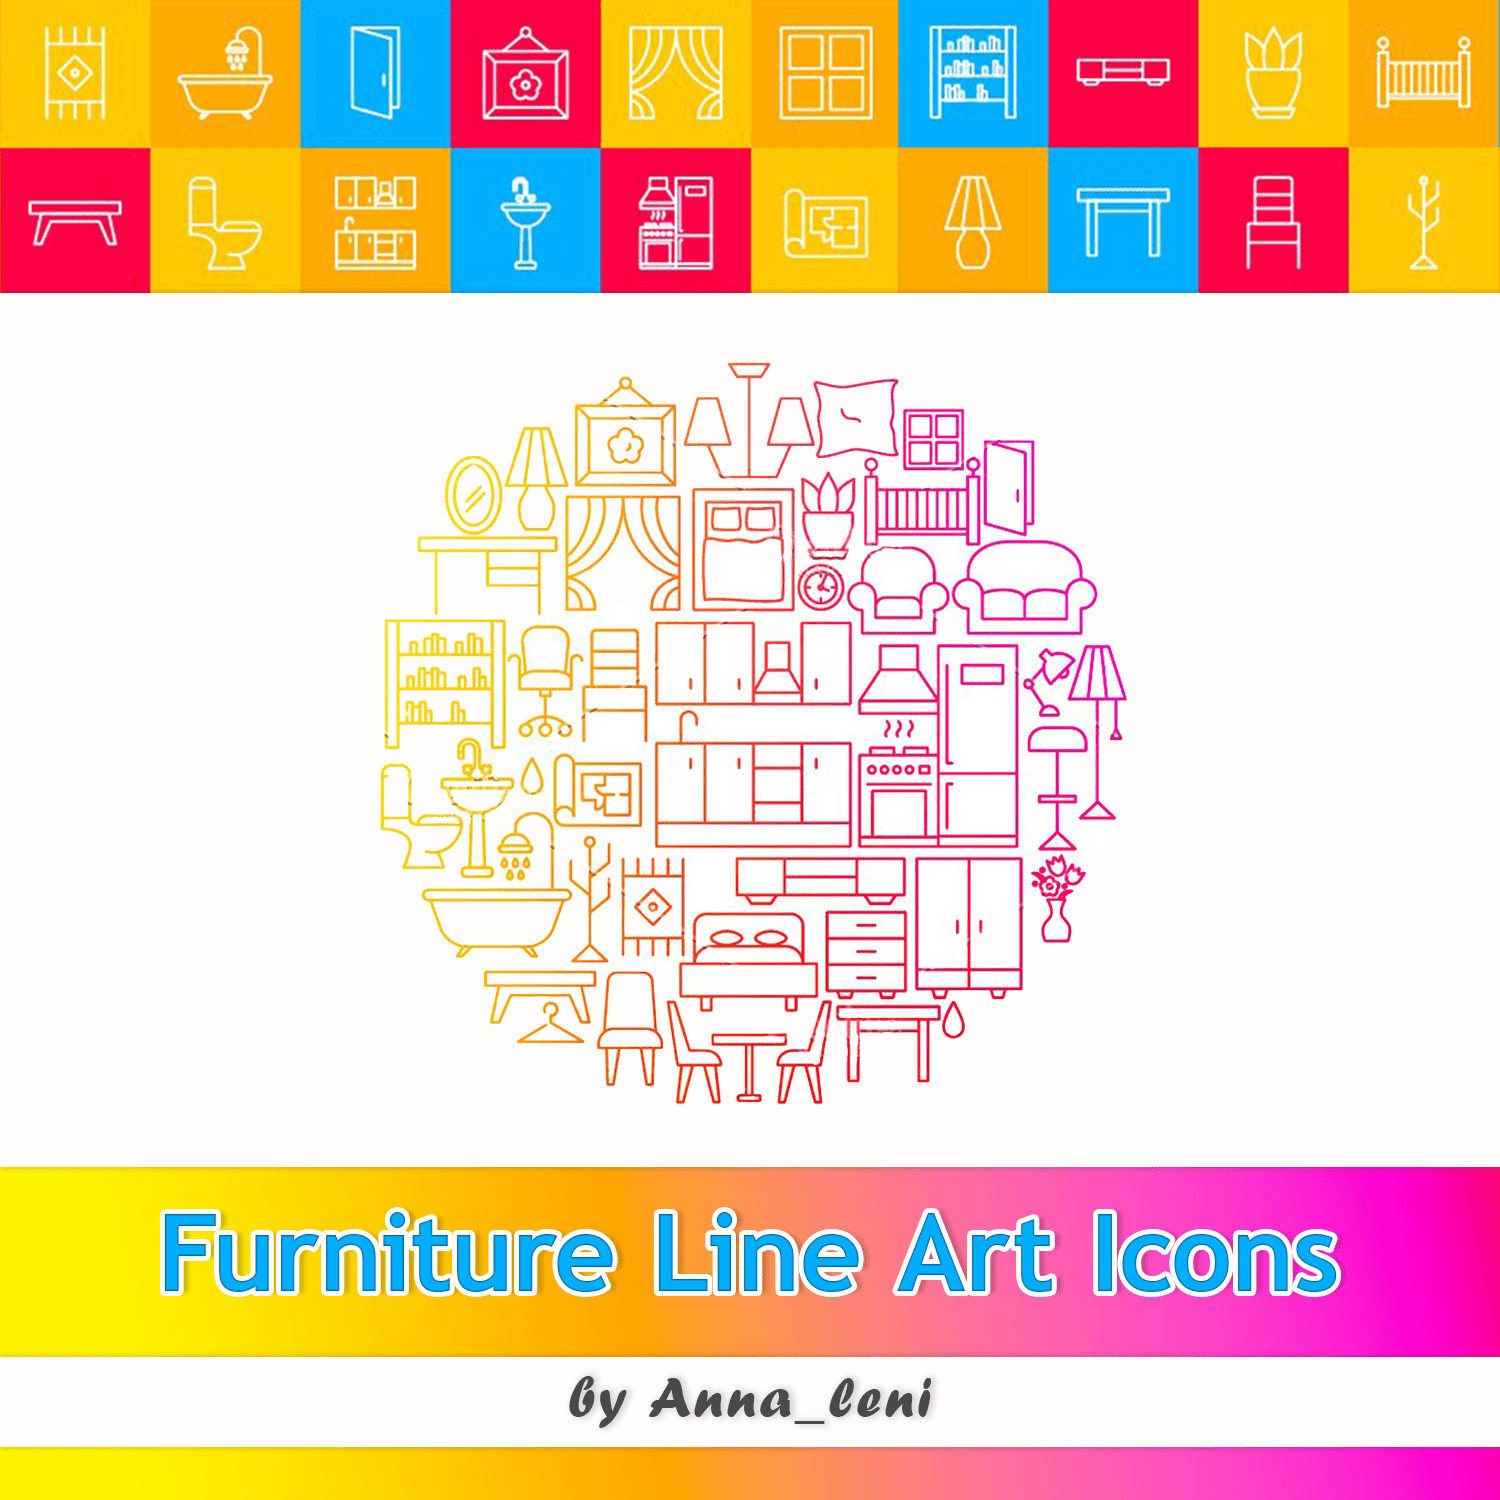 Furniture Line Art Icons.